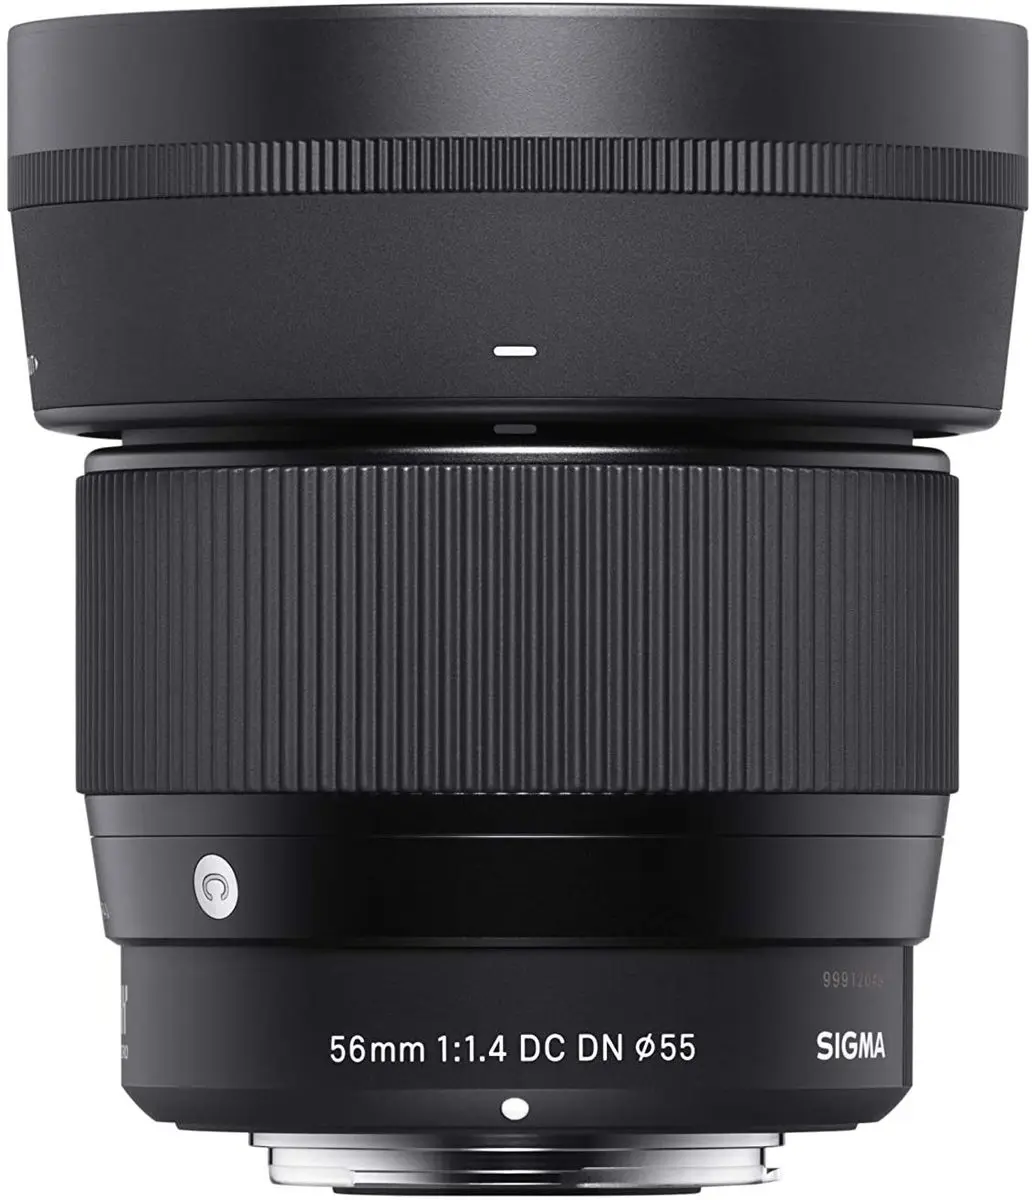 4. Sigma 56mm F1.4 DC DN | Contemporary (M4/3) Lens